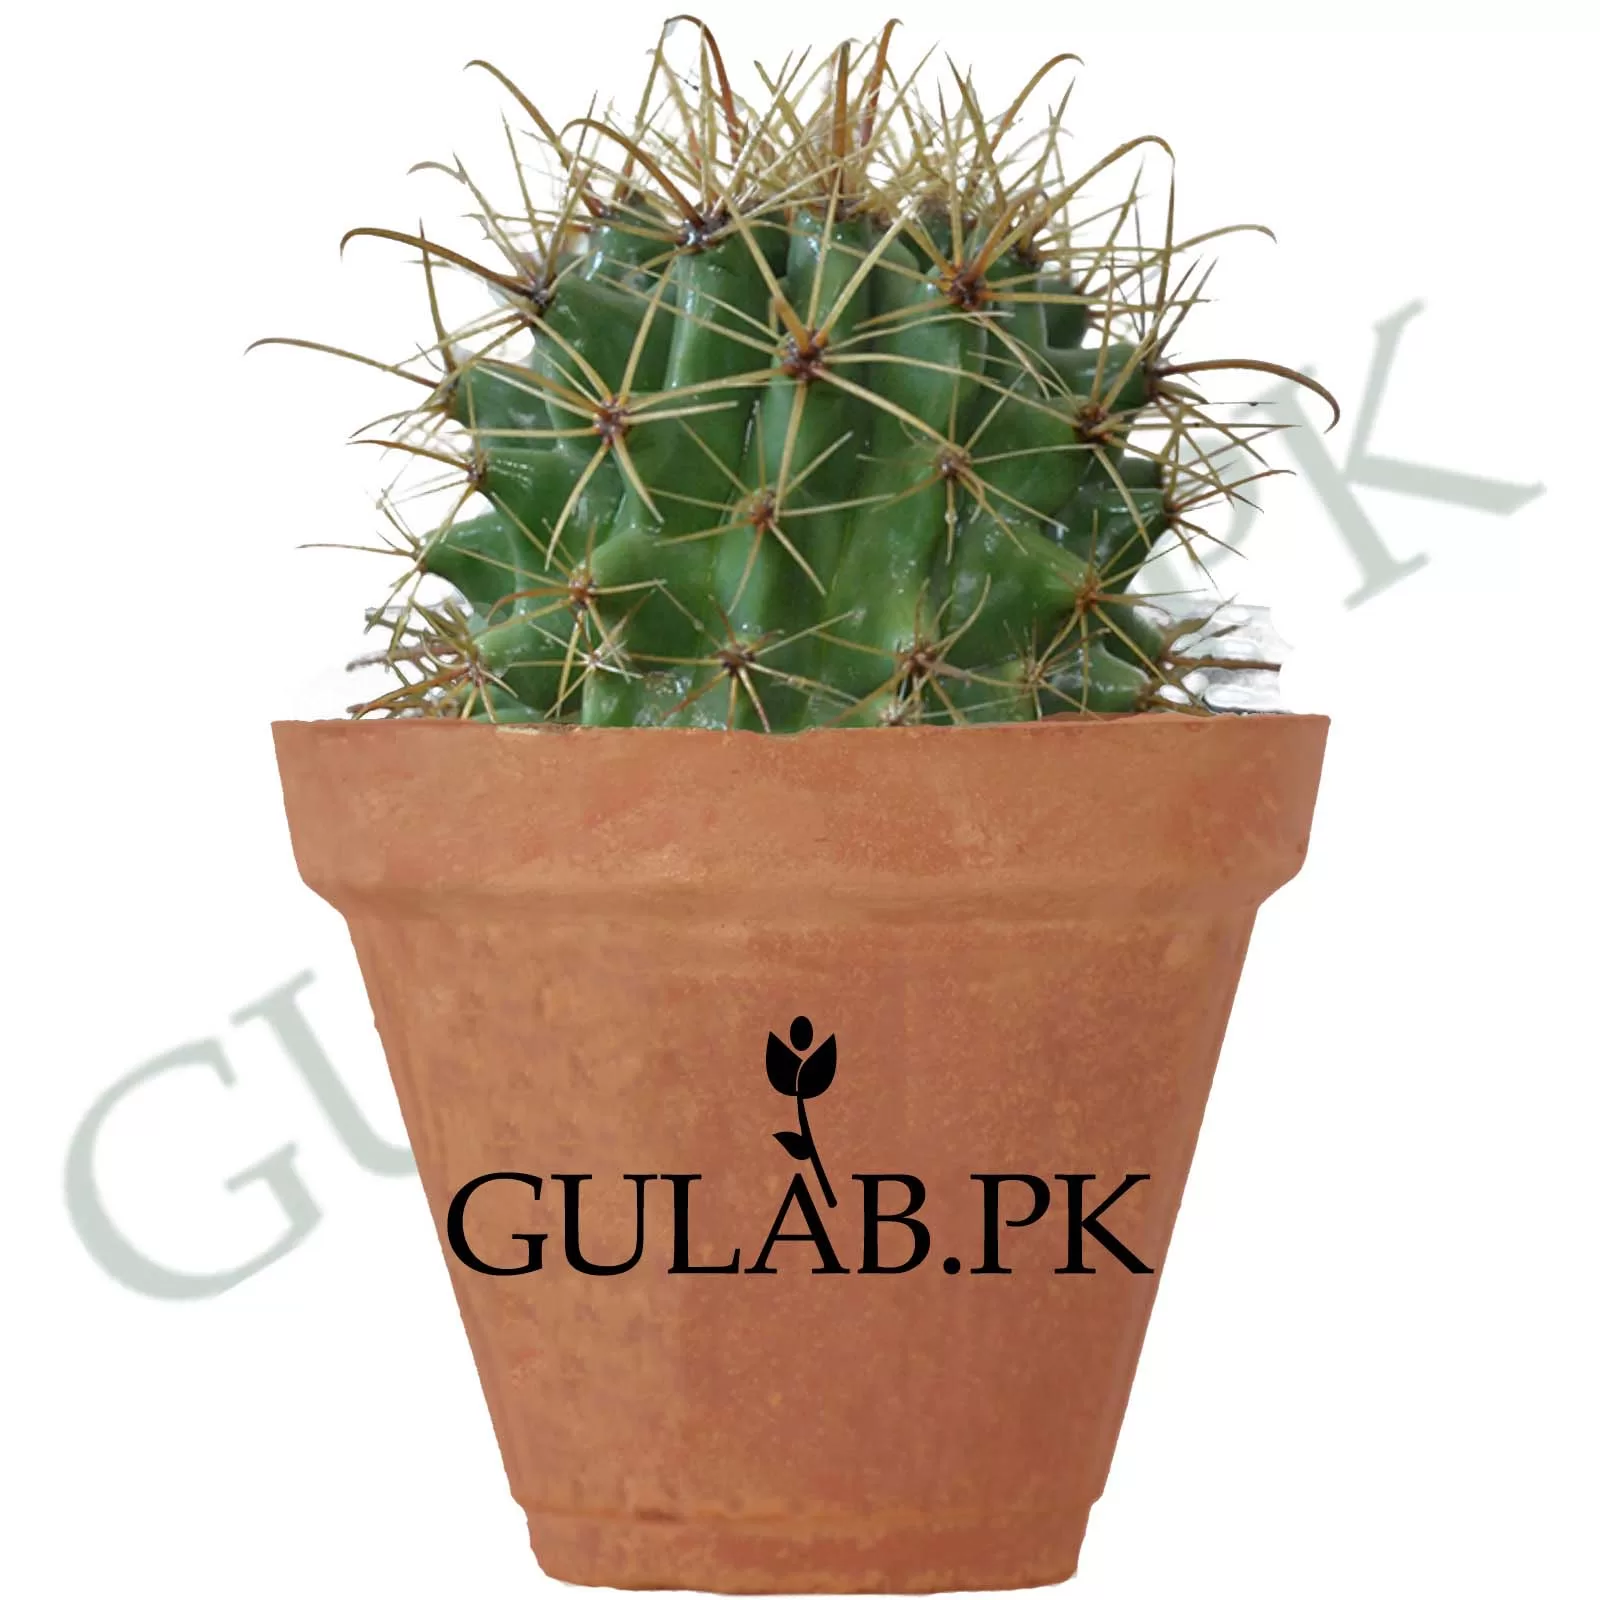 https://www.gulab.pk/lahore/wp-content/uploads/sites/29/2022/01/01.-Fish-Hook-Barrel-Cactus-full-images-jpg.webp